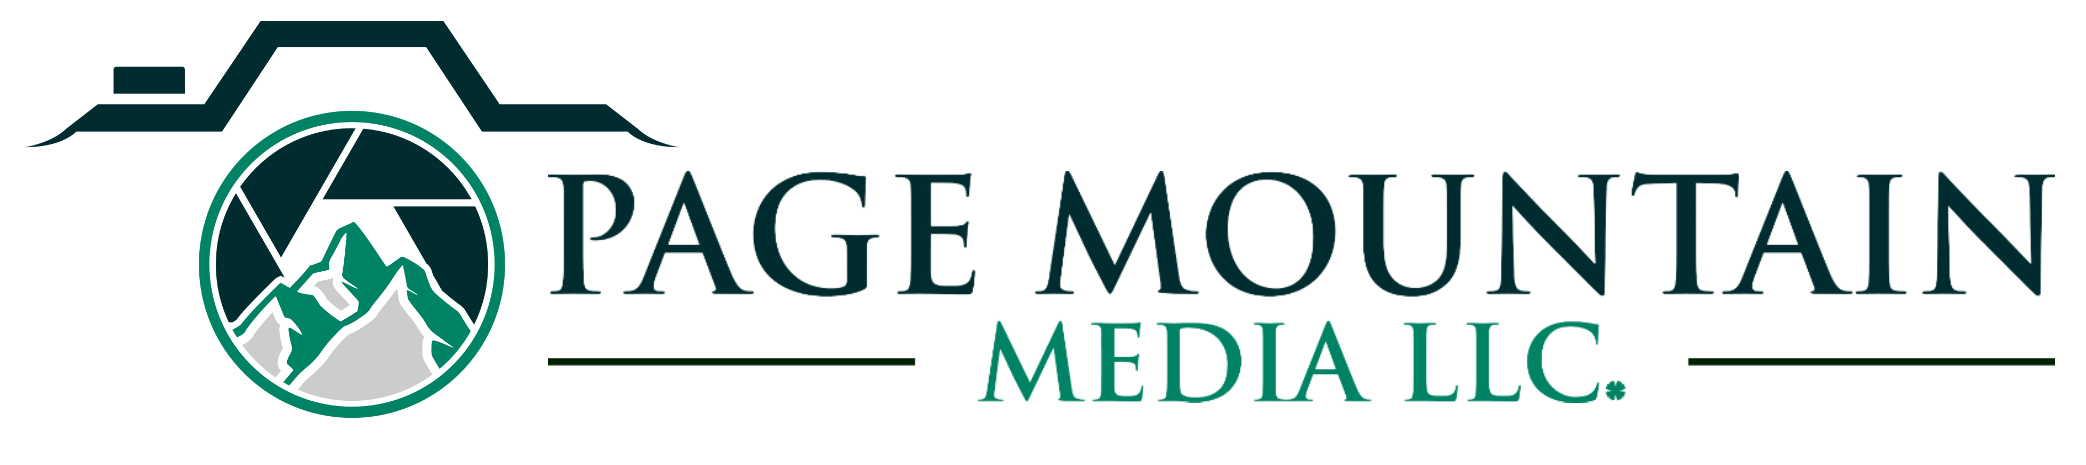 Page Mountain Media LLC